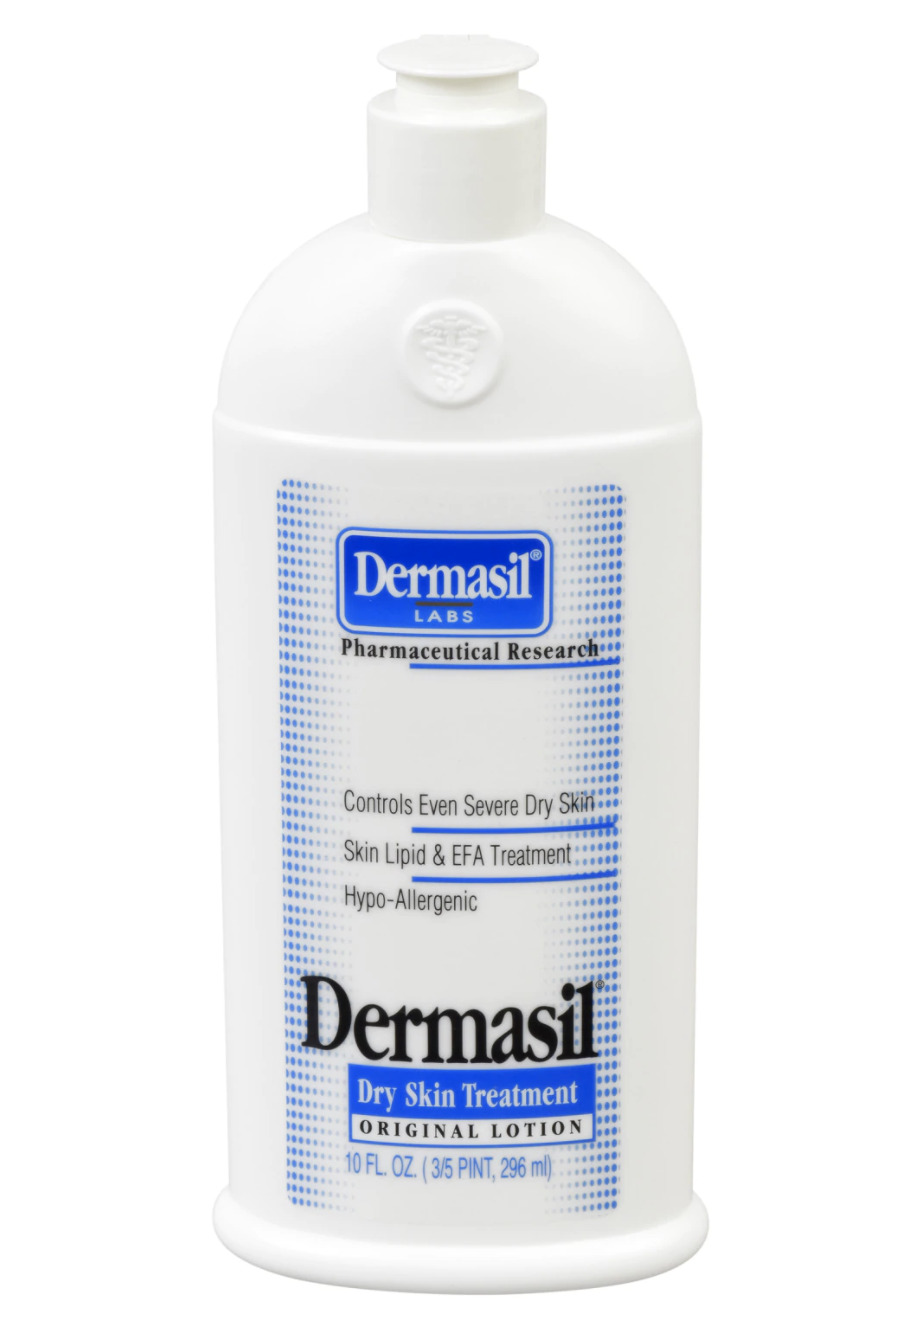 Dermasil Dry Skin Lotion, 8 Oz. Bottles - 4 Pack